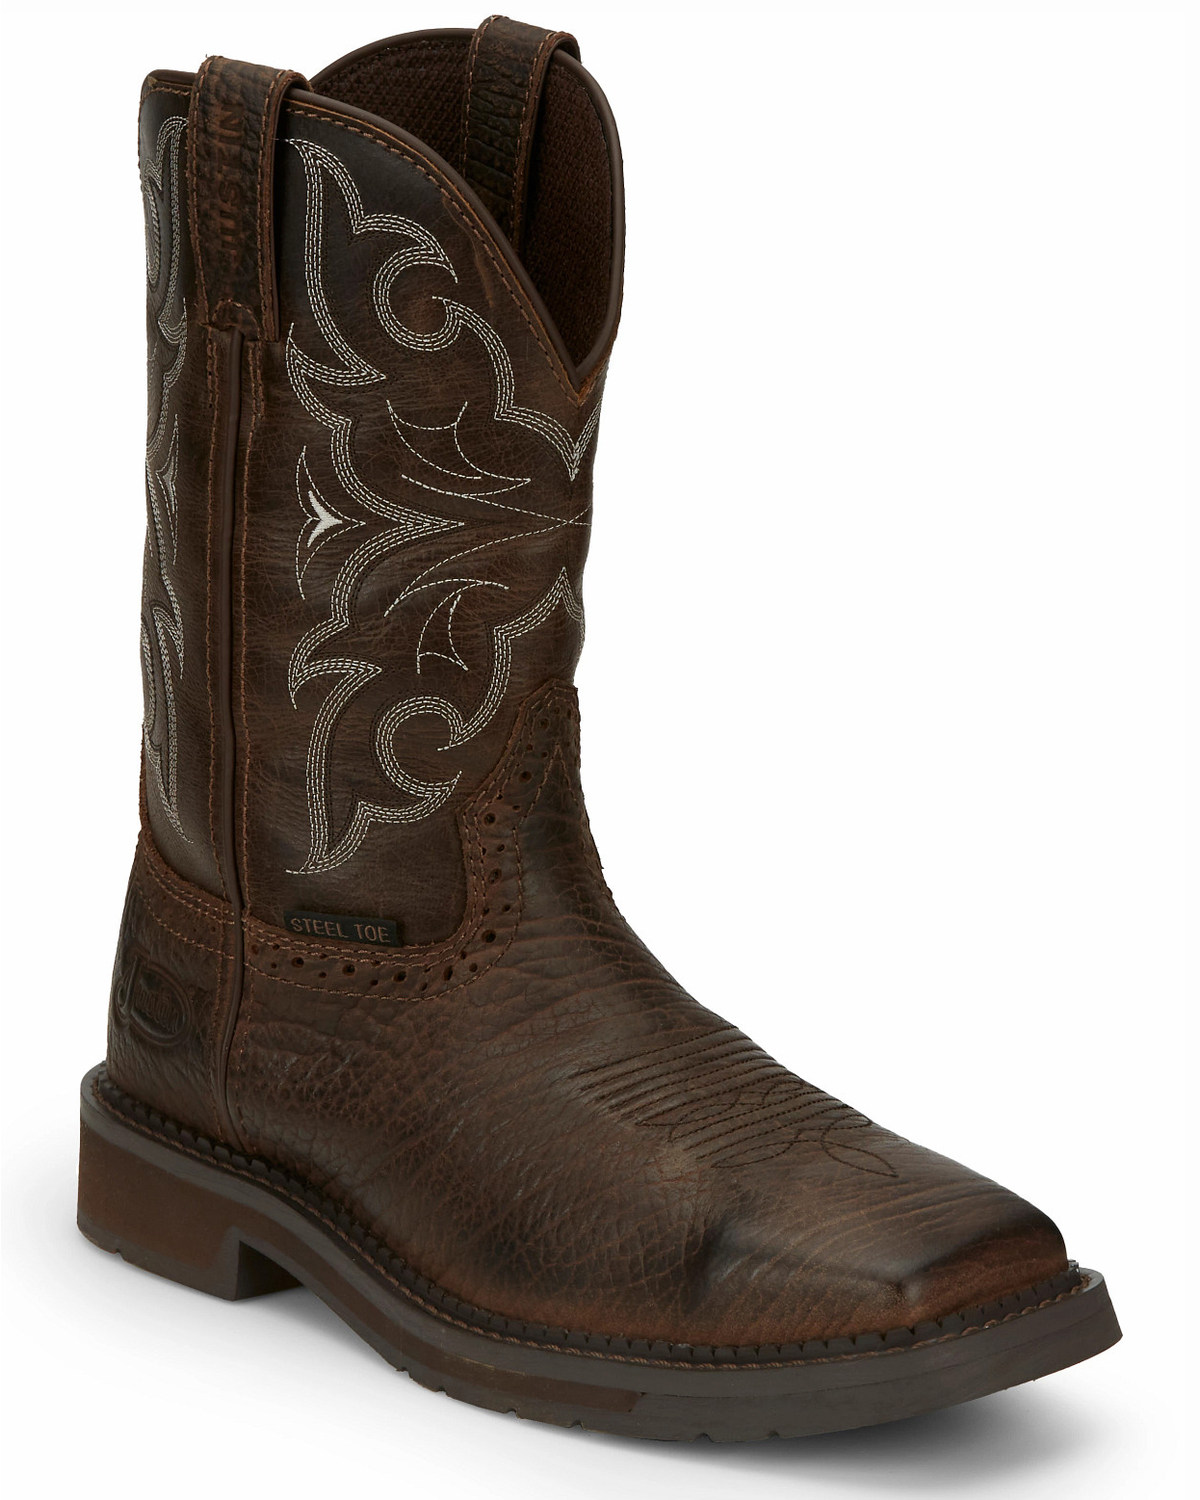 Justin Men's Amarillo Cactus Western Work Boots - Steel Toe